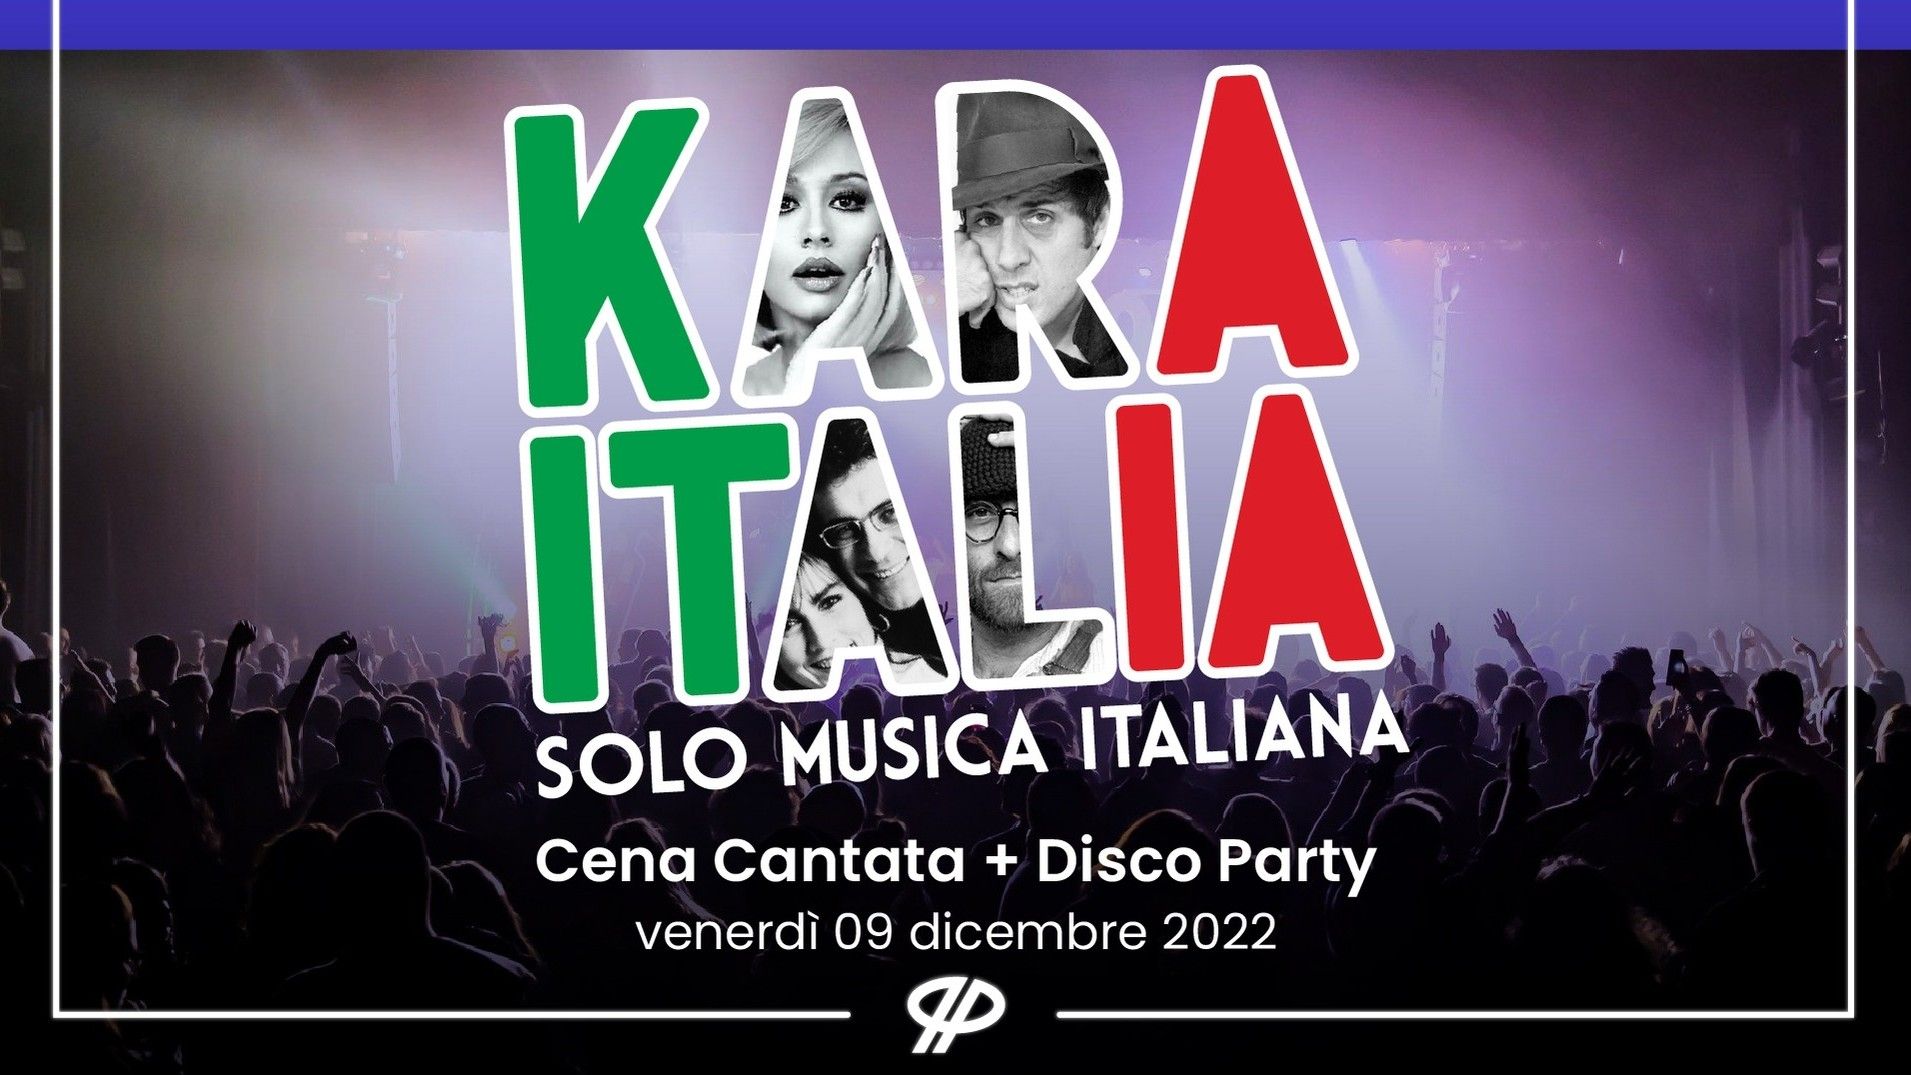 Kara Italia
Cena Cantata + Disco Party
Solo Musica Italiana